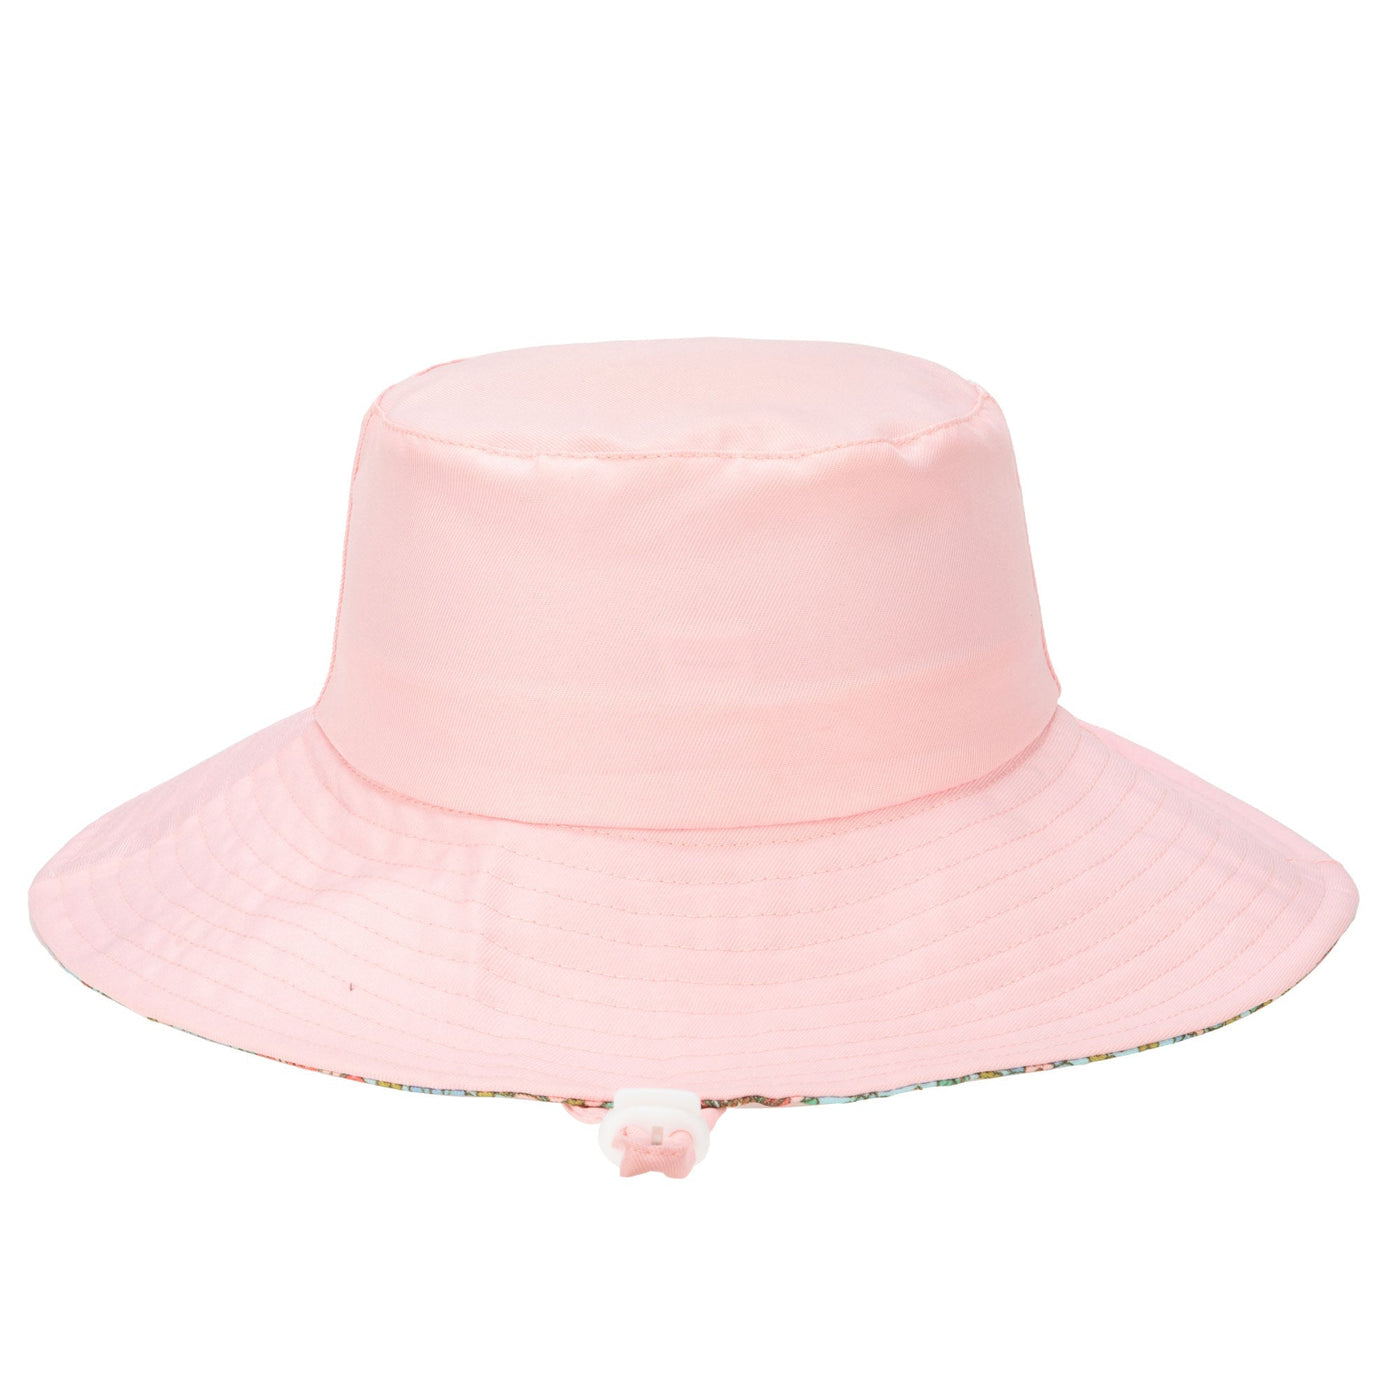 BUCKET - Kids Floppy Bucket Hat With Floral Printed Underbrim